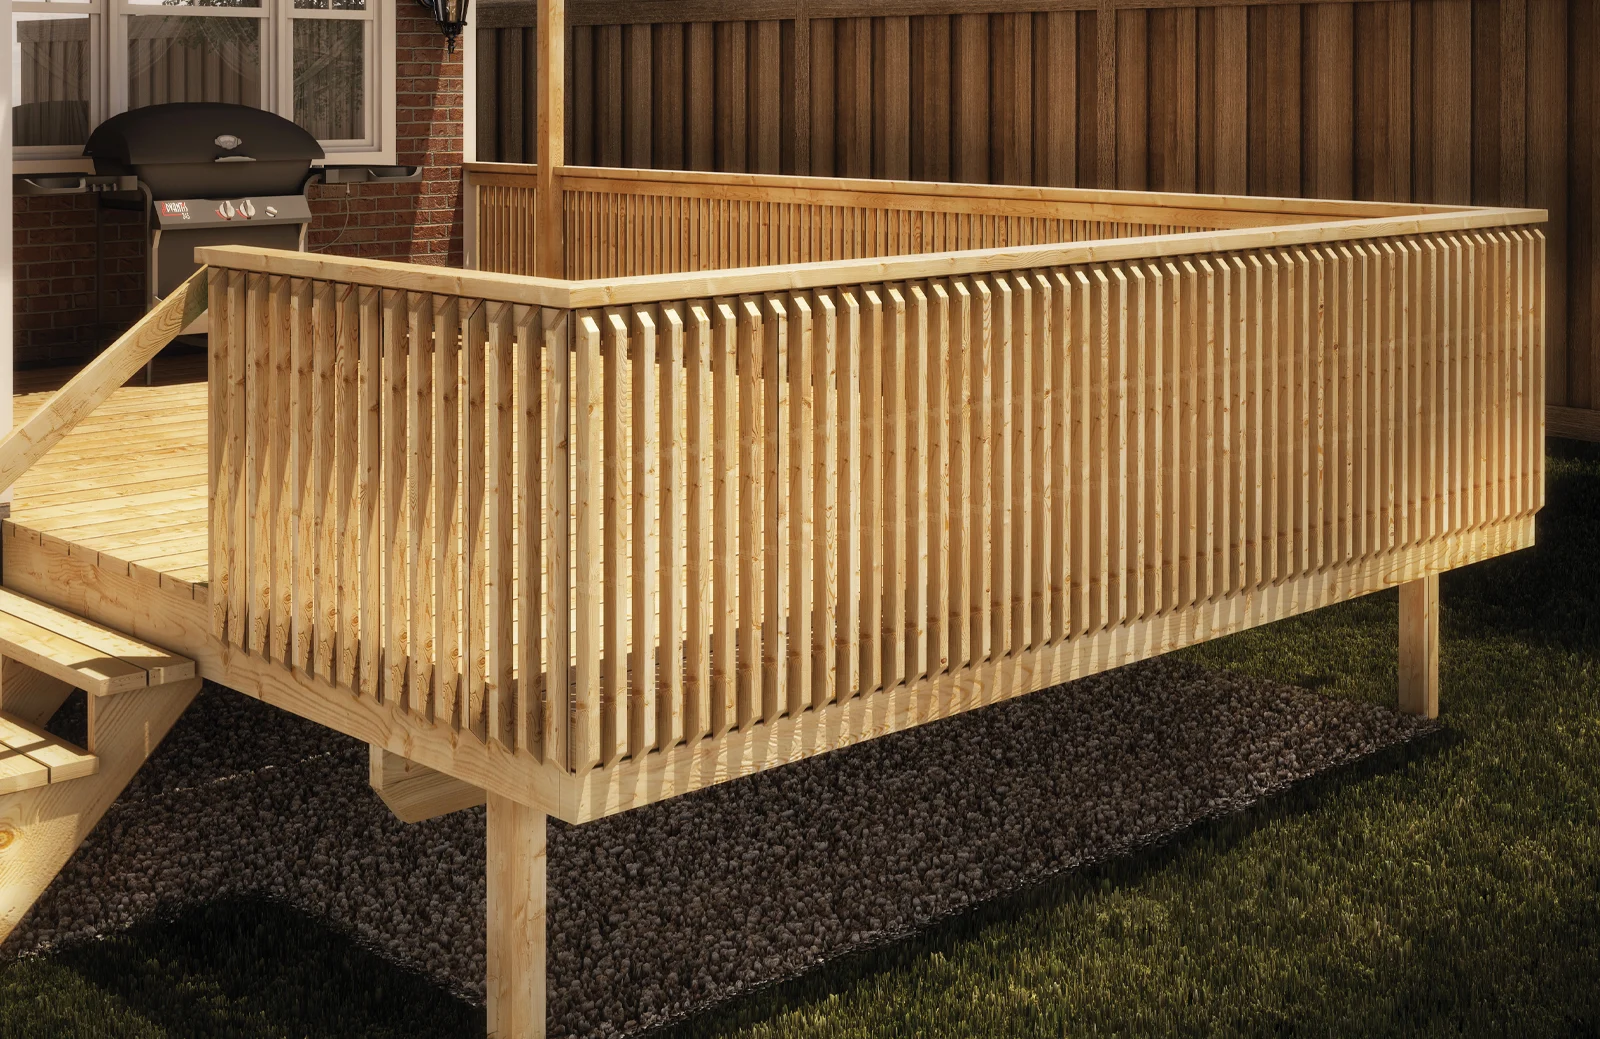 A wooden railing